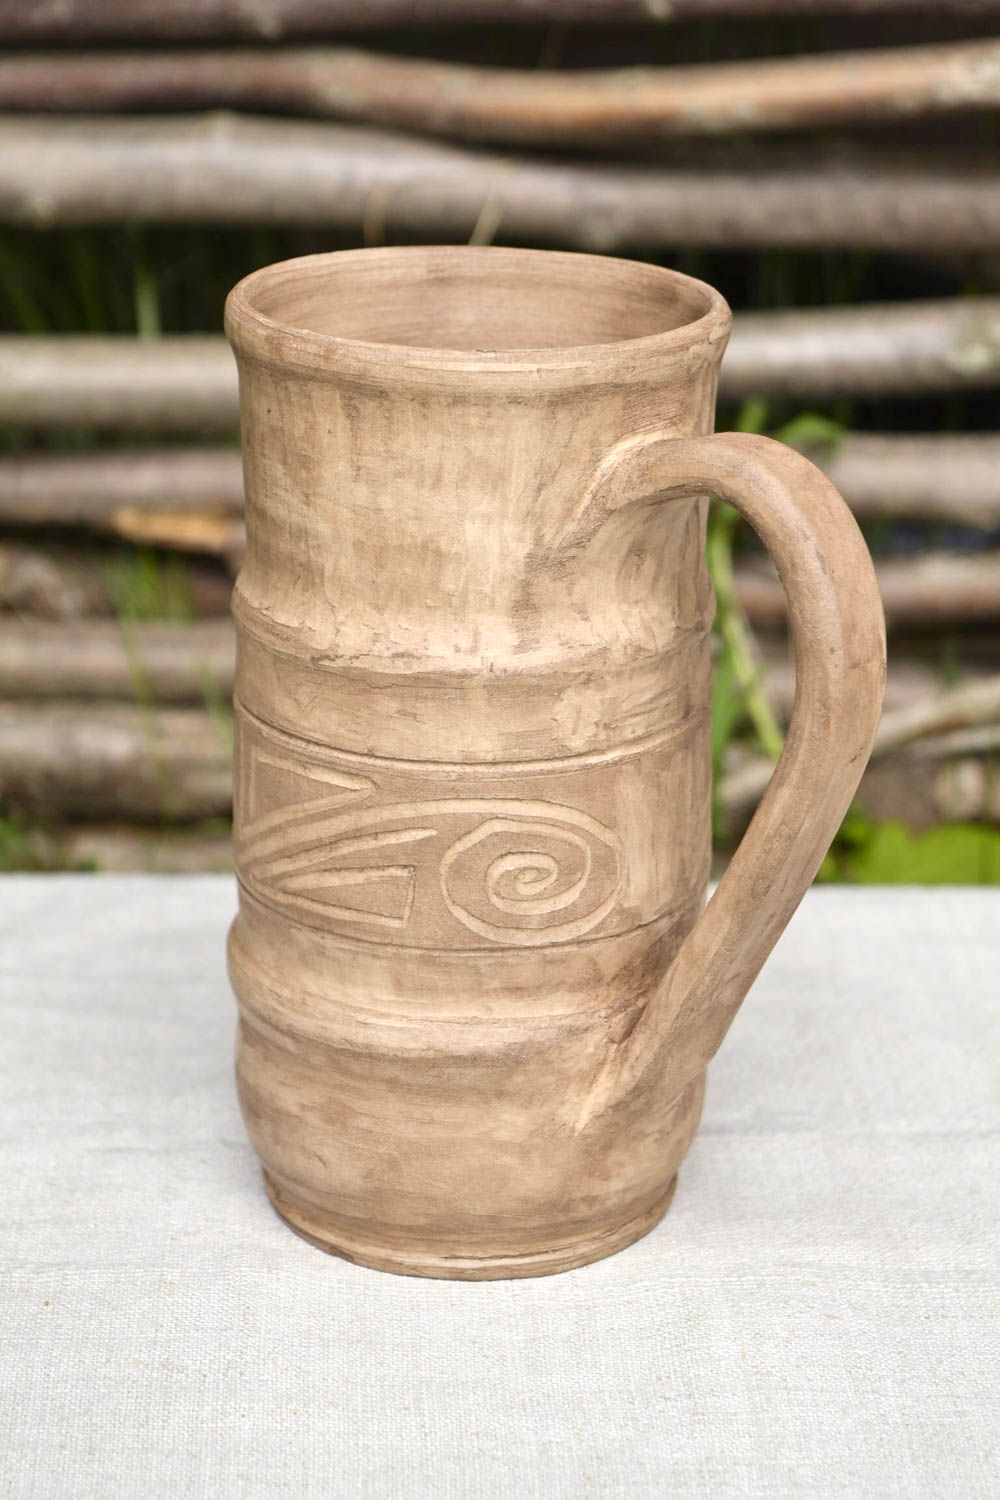 Unusual handmade ceramic beer mug pottery works table setting kitchen supplies photo 1